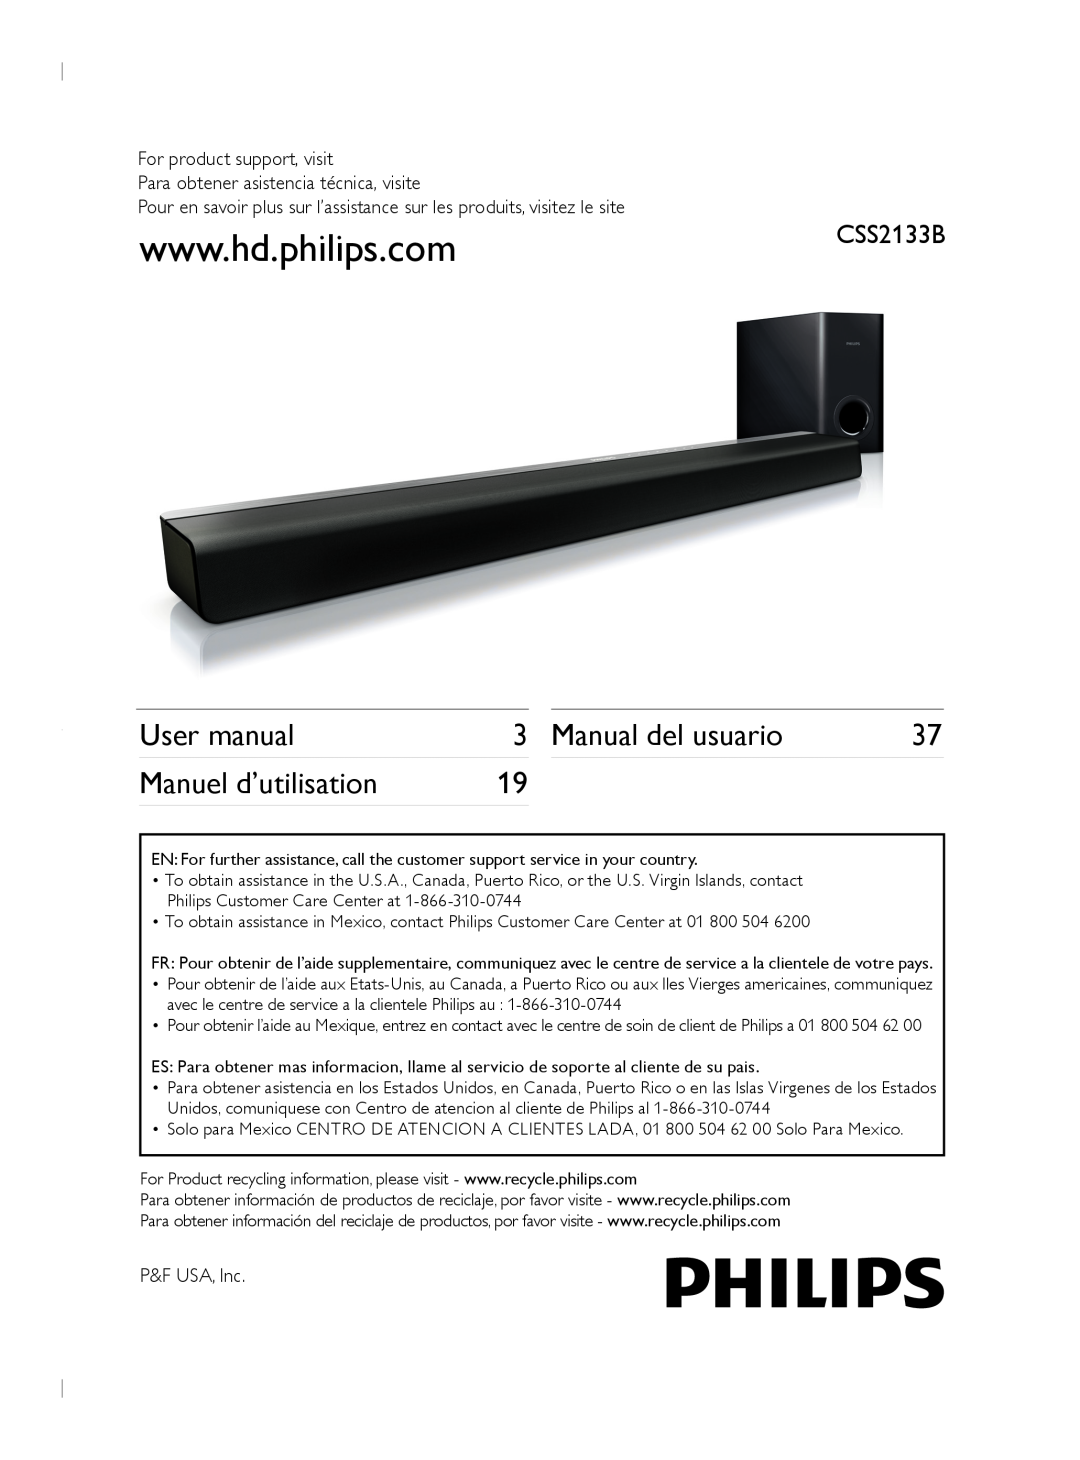 Philips CSS2133B user manual Manual del usuario, Manuel d’utilisation 